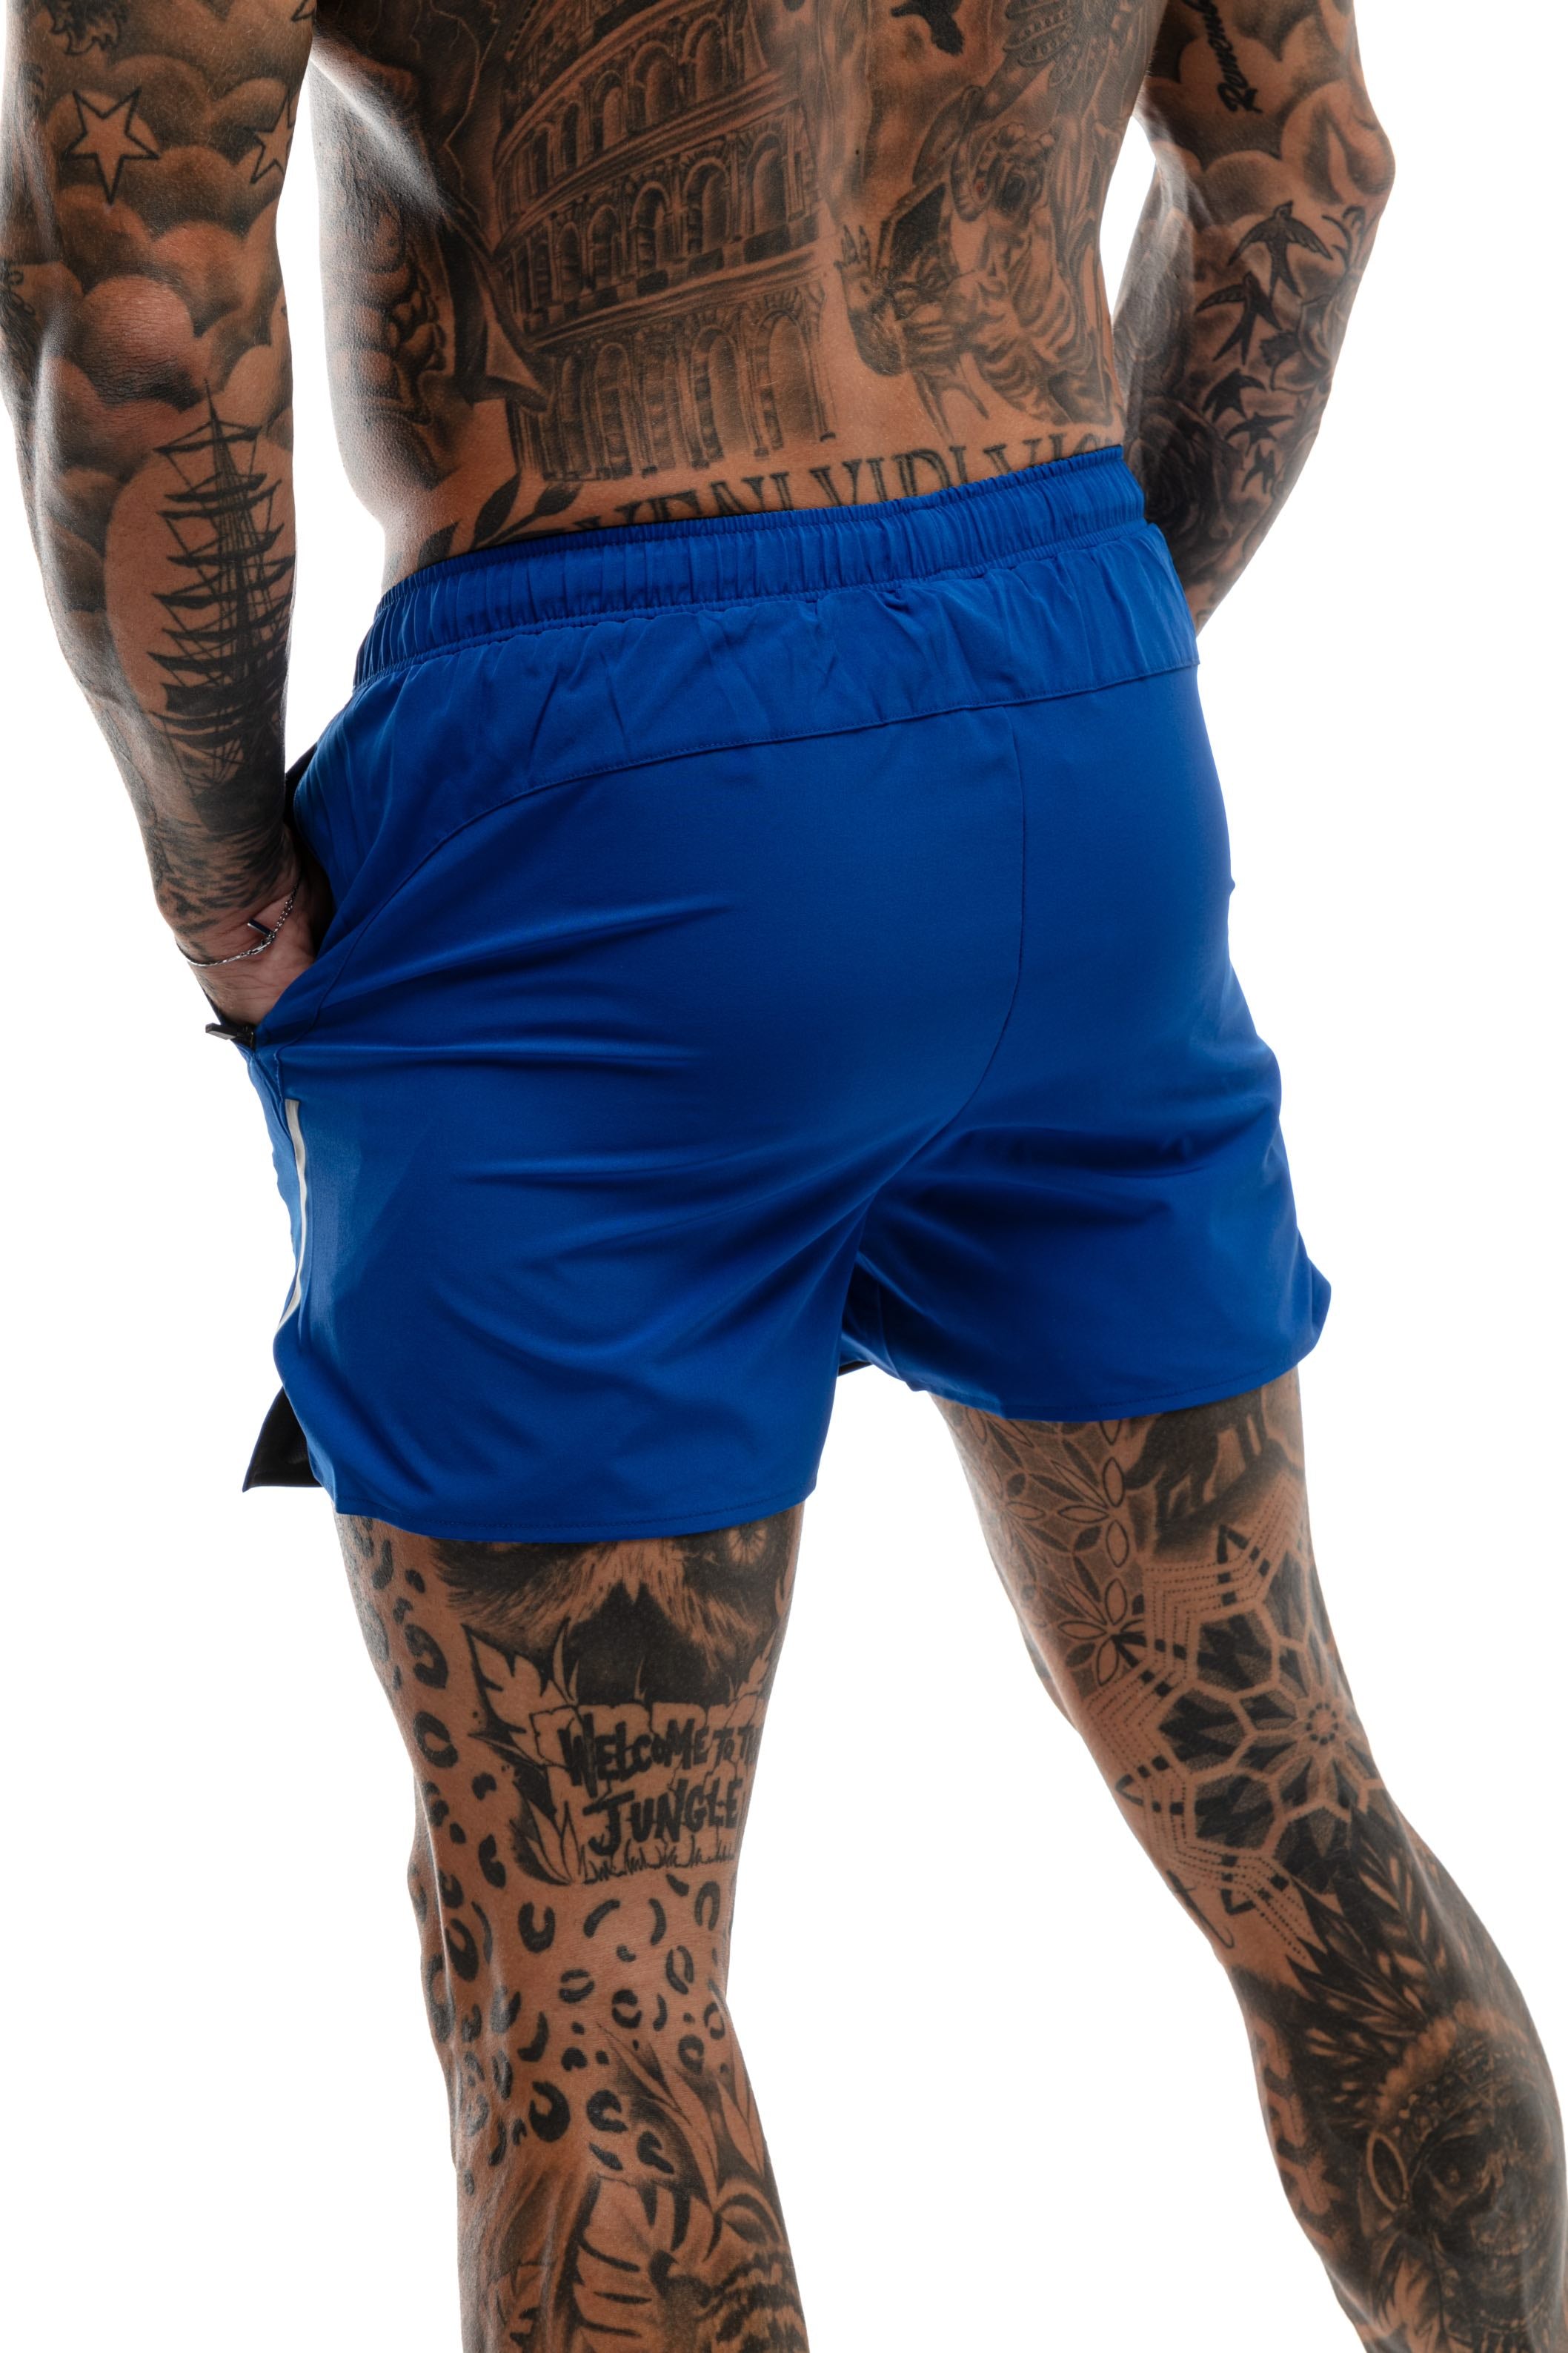 GymFreak Mens Fusion Shorts - Royal Blue - 3.5 inch